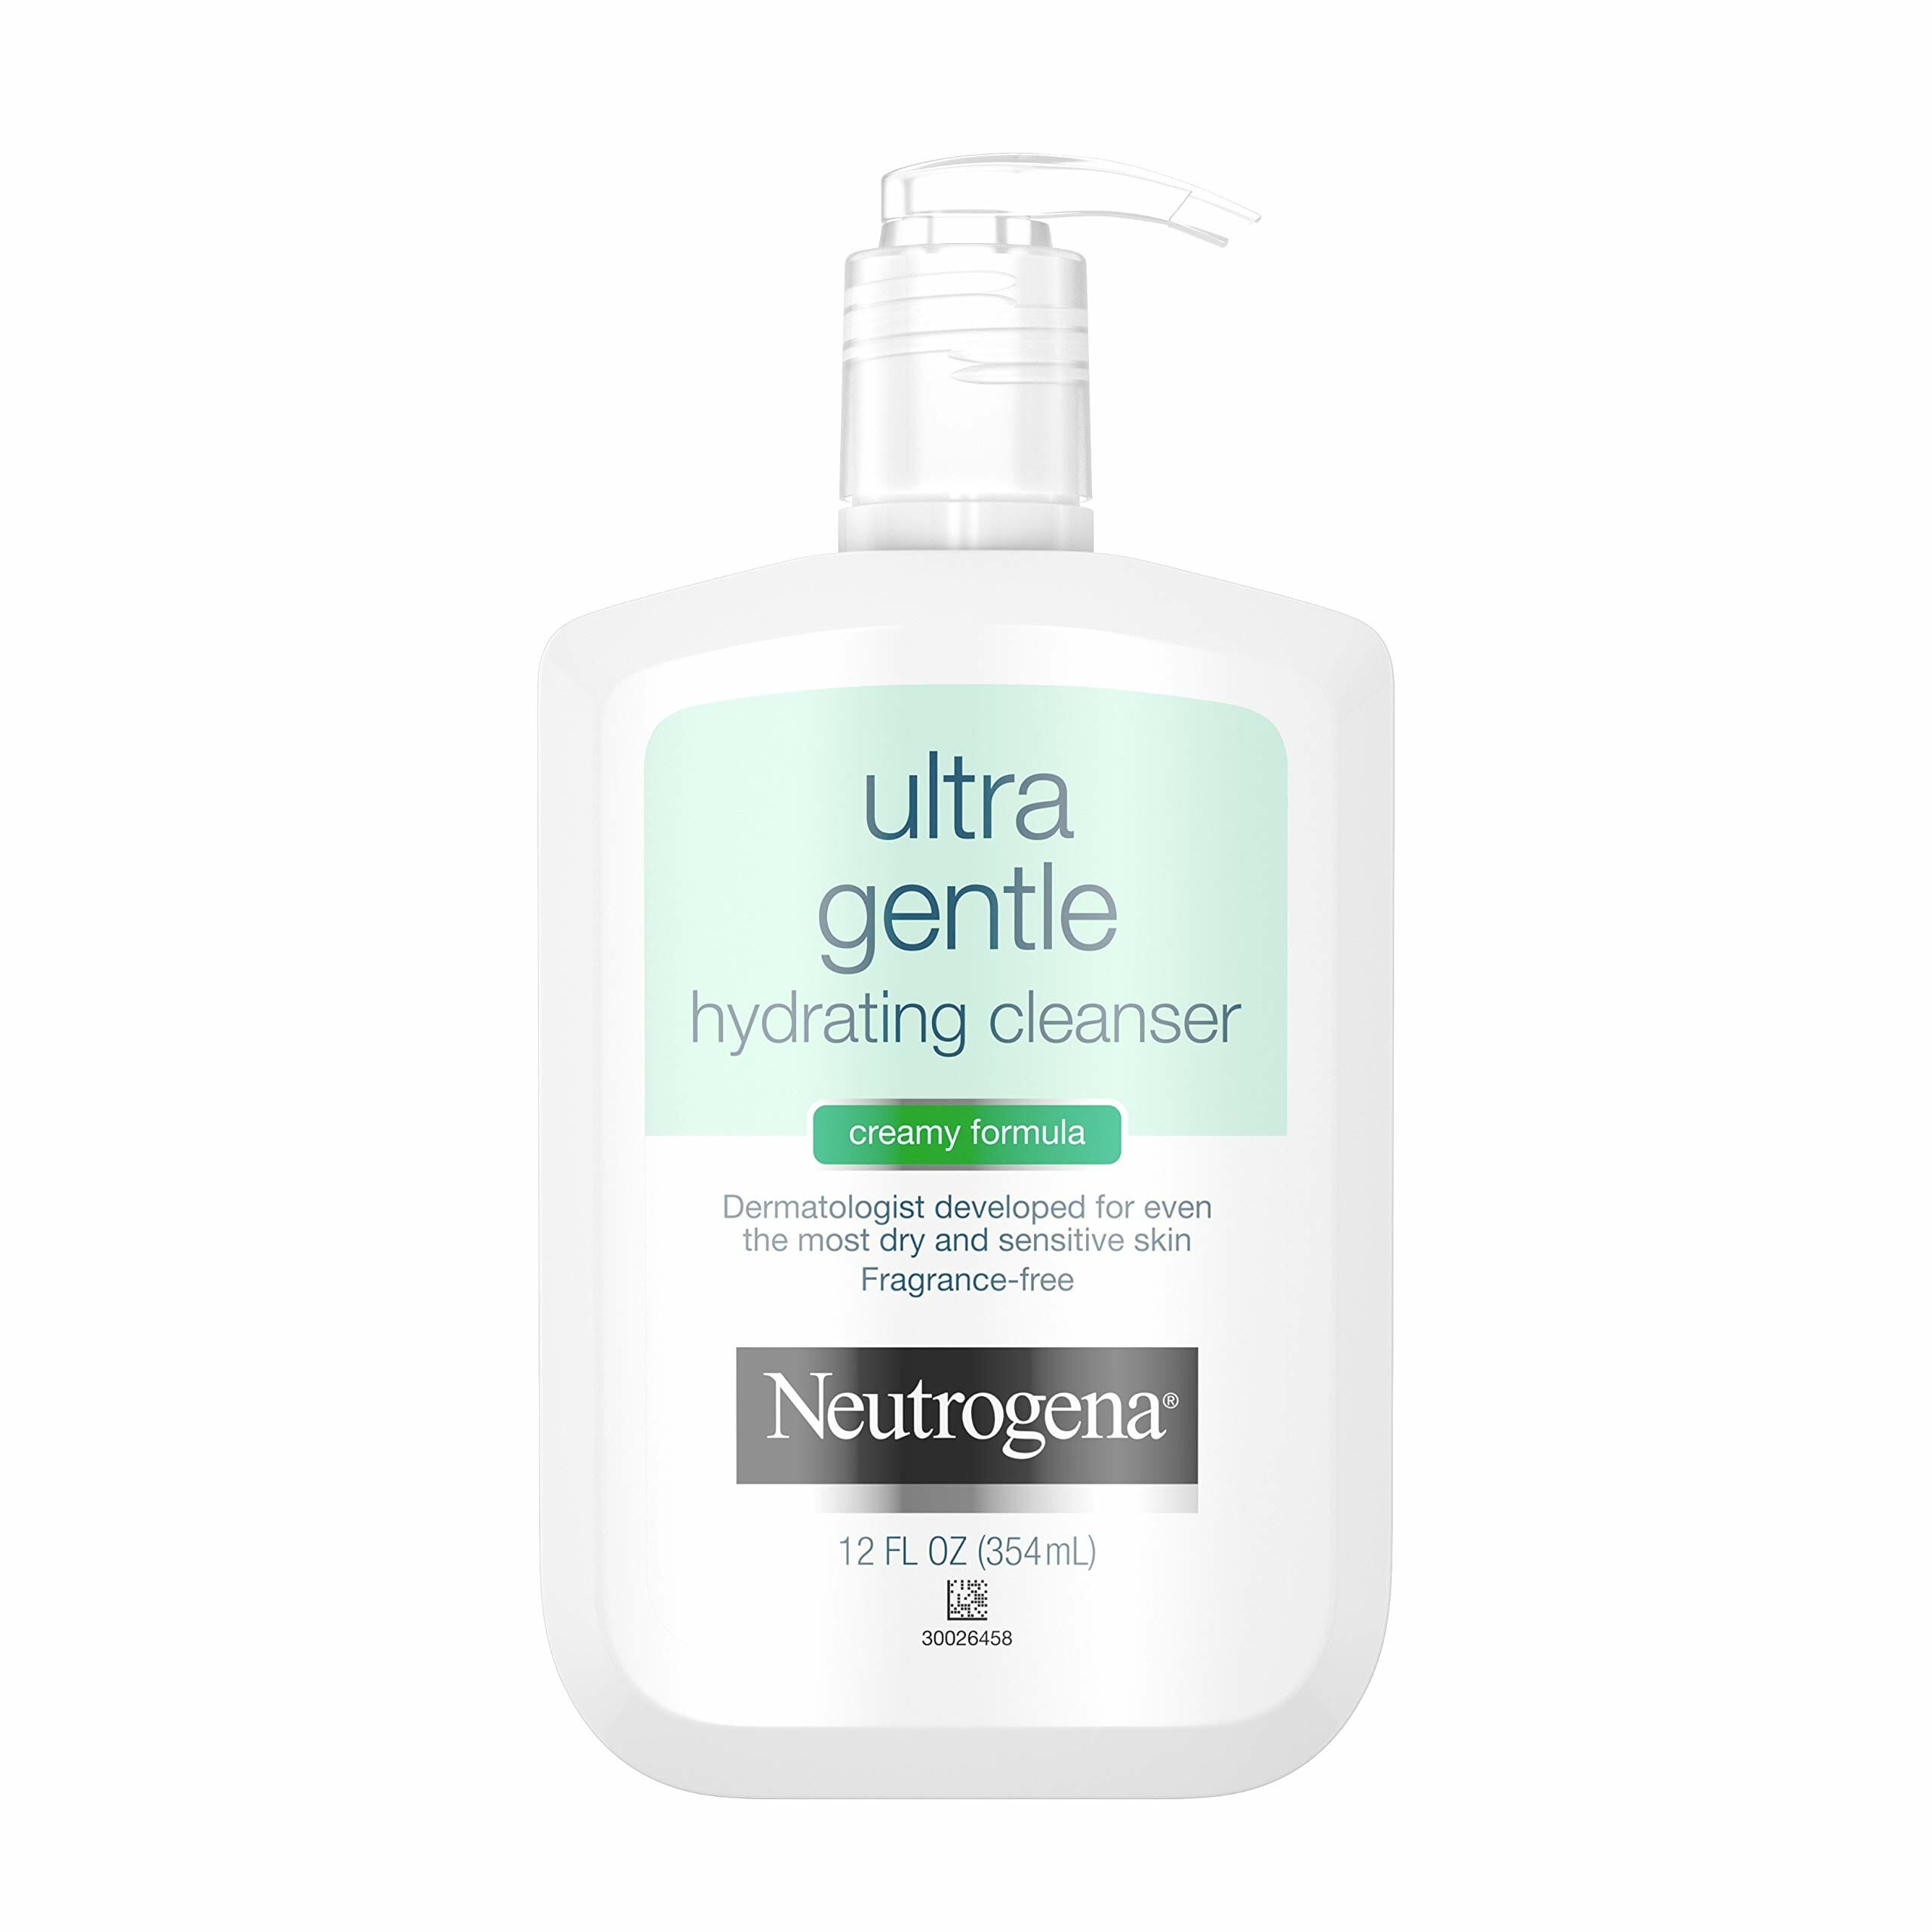 Neutrogena ultra gentle hydrating facial cleanser